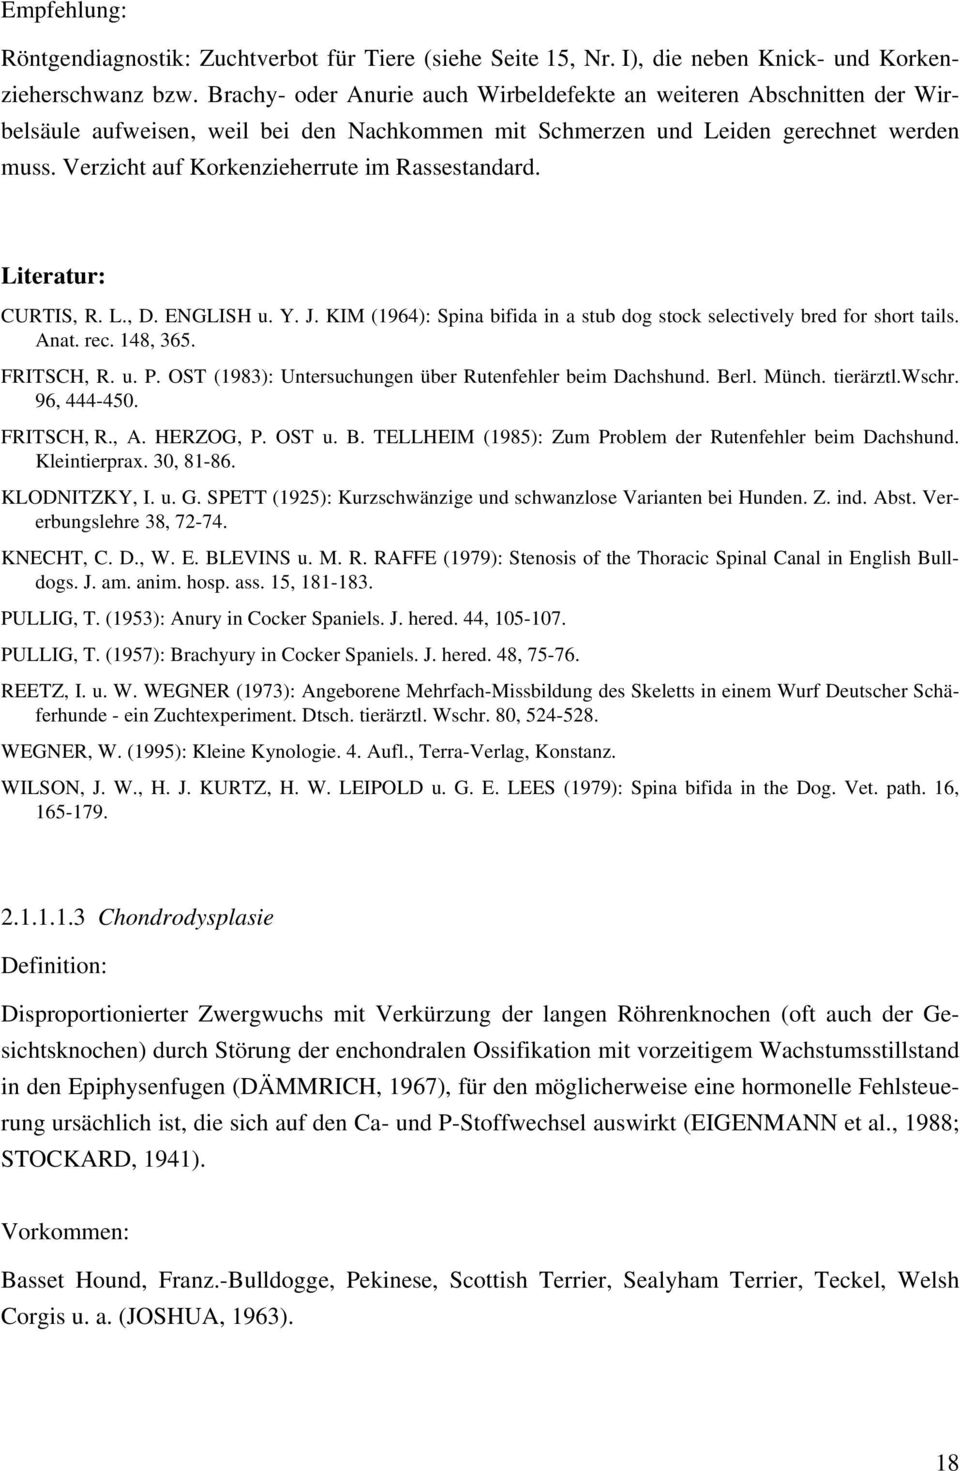 Verzicht auf Korkenzieherrute im Rassestandard. Literatur: CURTIS, R. L., D. ENGLISH u. Y. J. KIM (1964): Spina bifida in a stub dog stock selectively bred for short tails. Anat. rec. 148, 365.